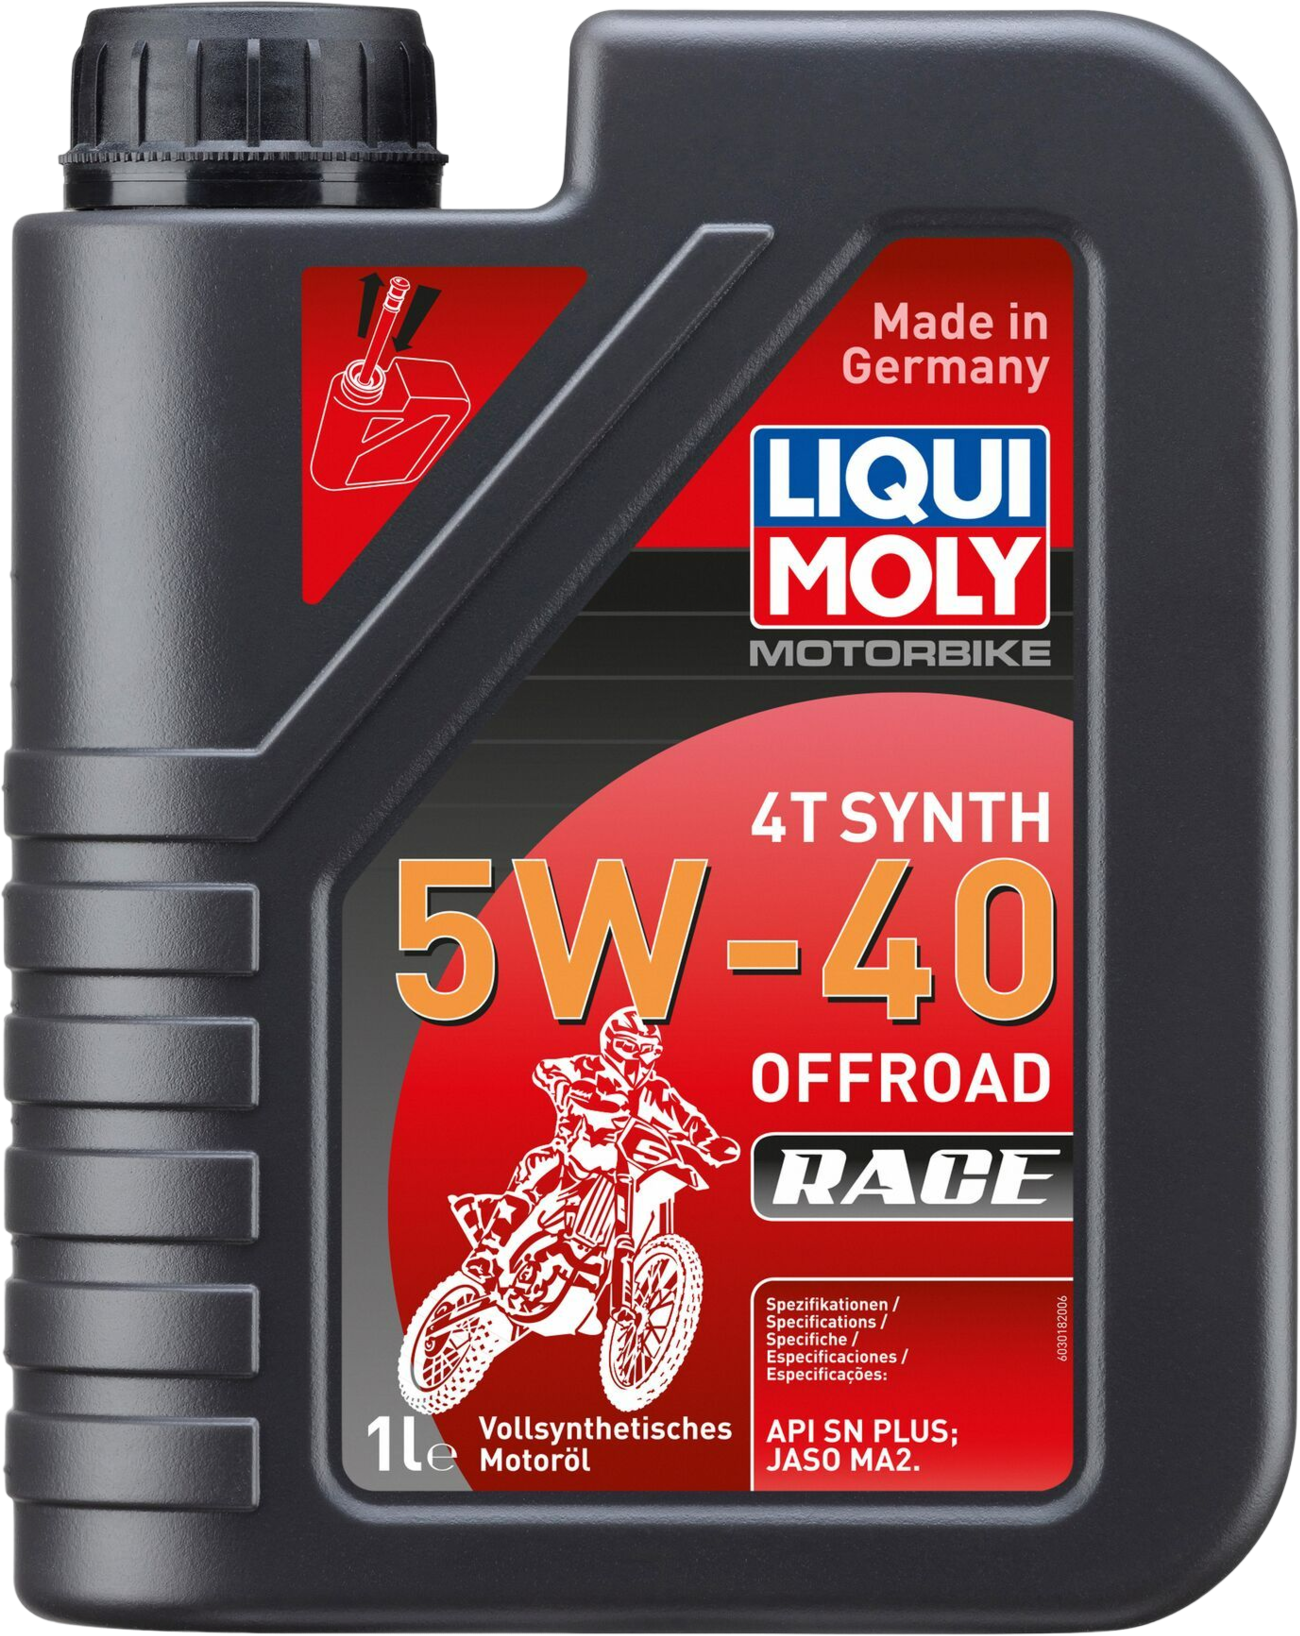 Liqui Moly Motorbike 4T Synth 5W-40 Offroad Race, 1 lt